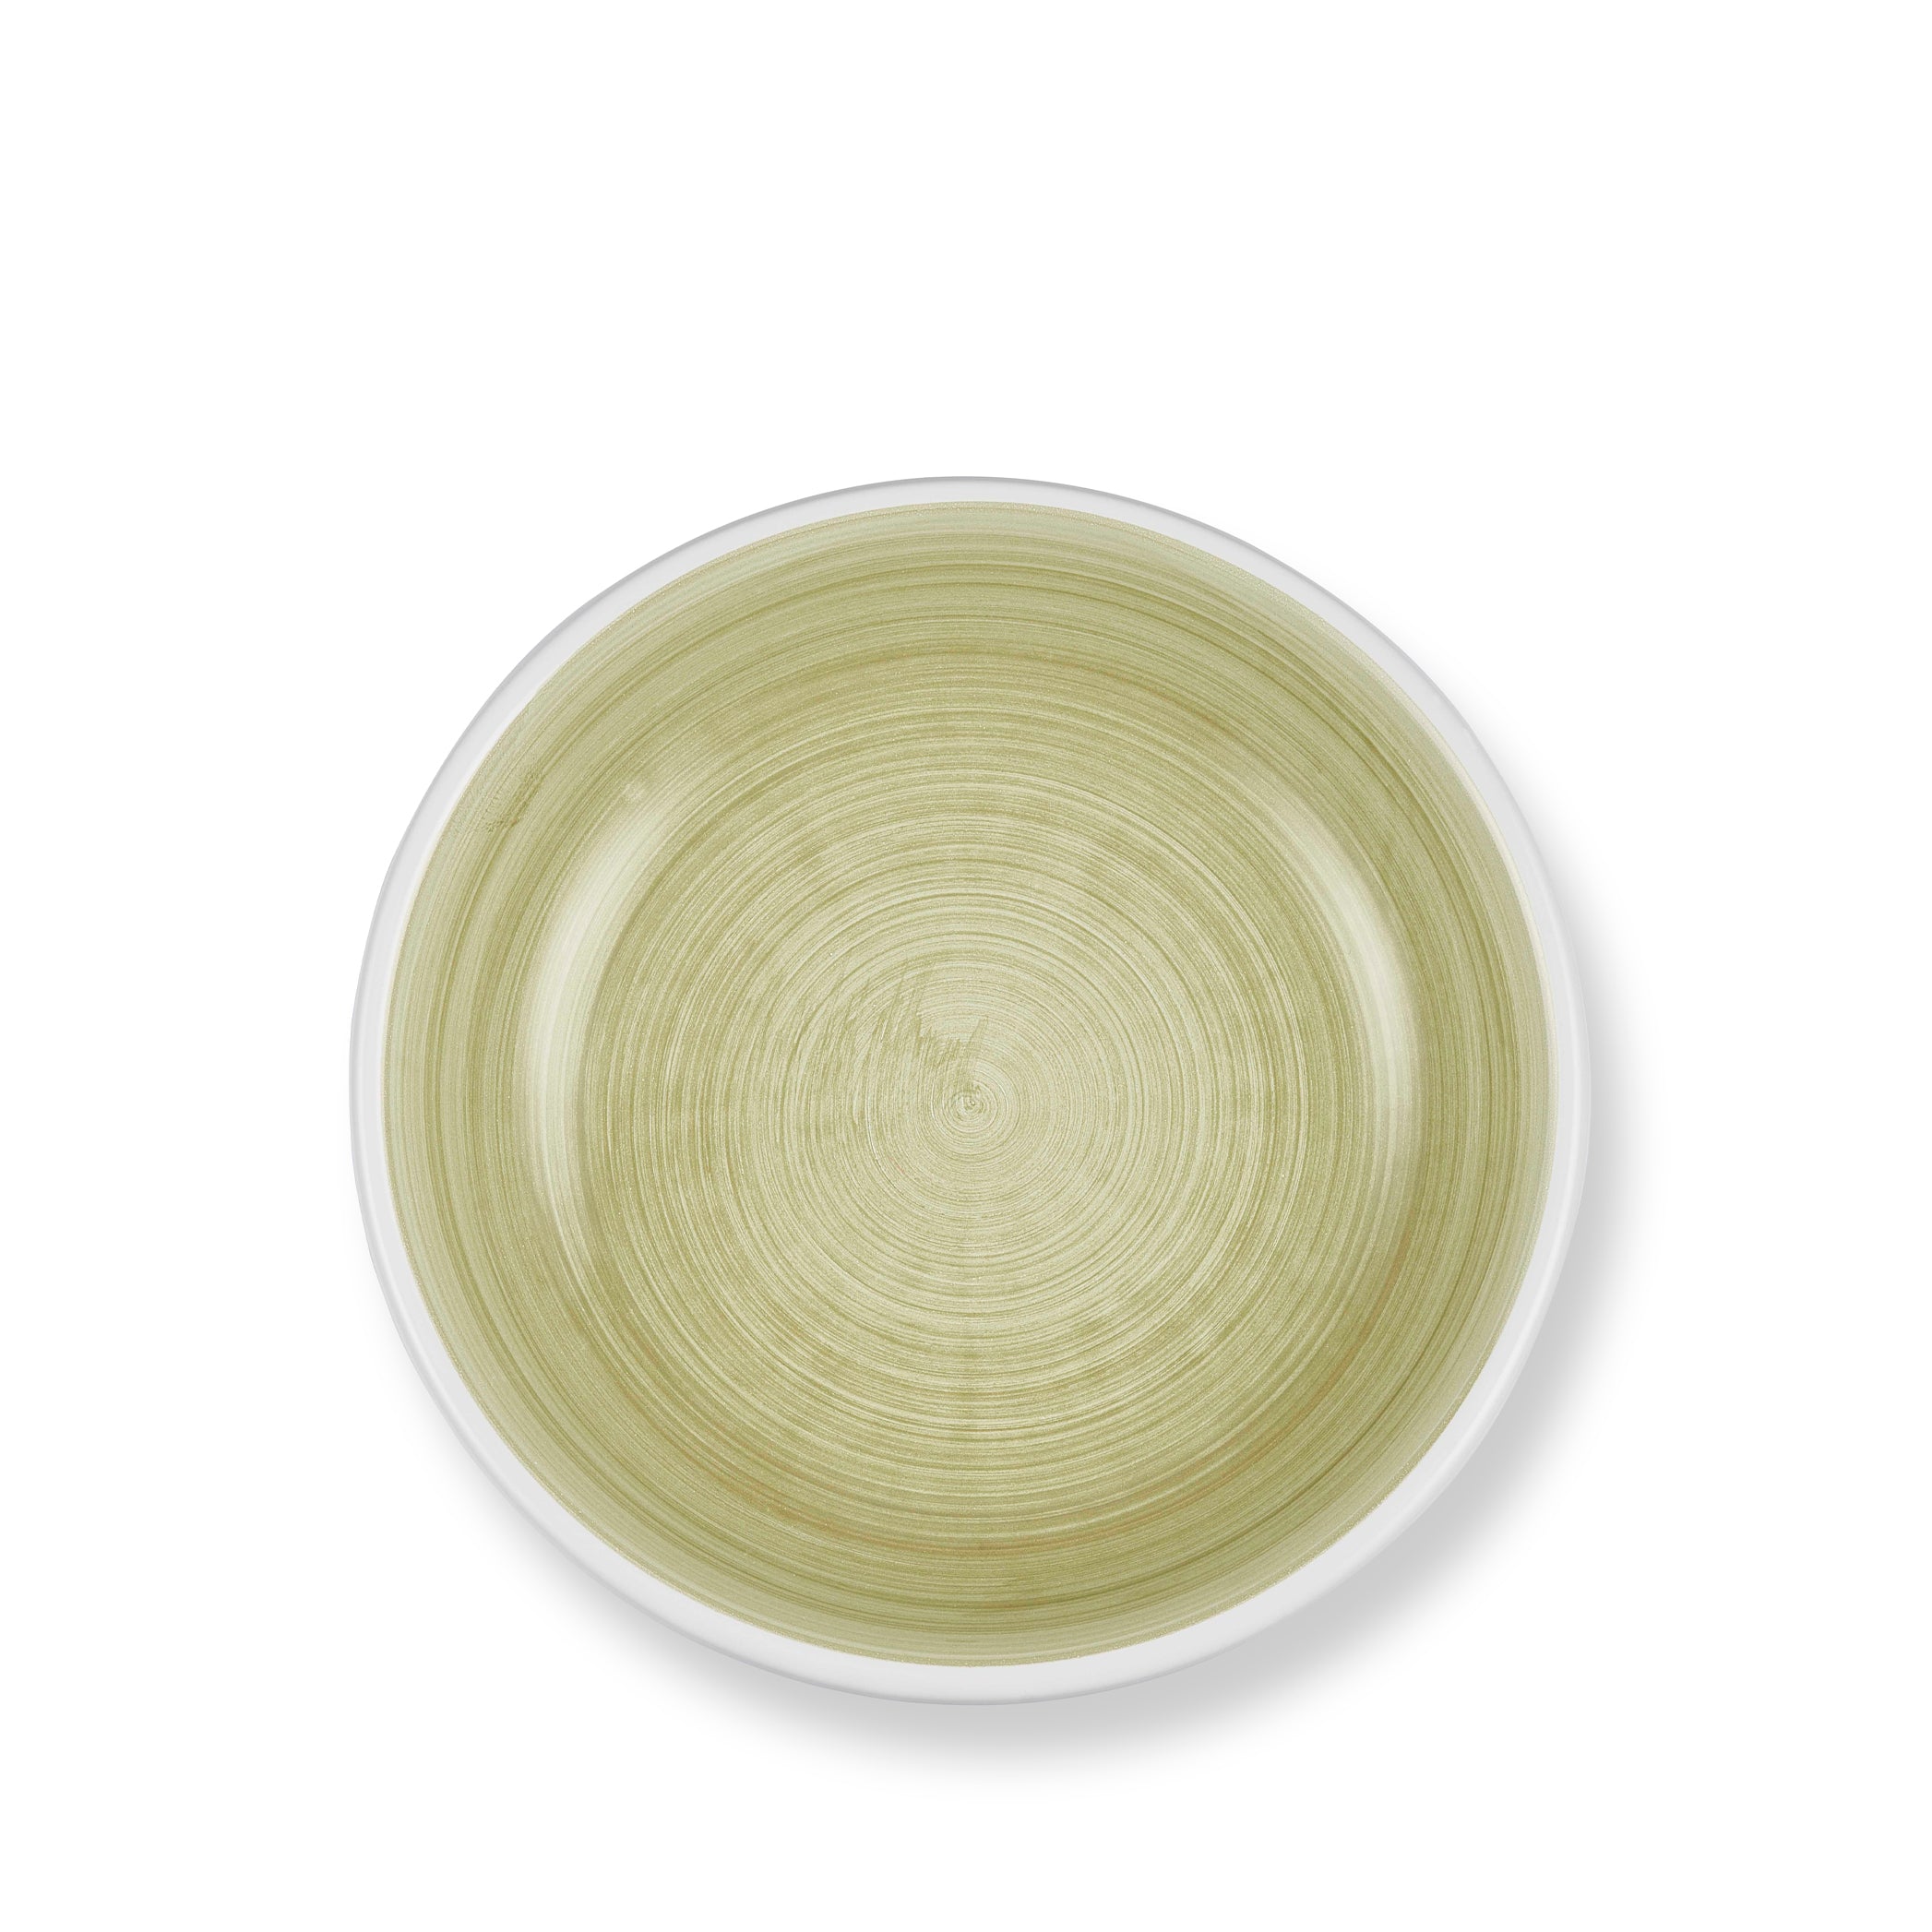 S&B 'Brushed' Ceramic Pasta Bowl in Season Green, 22cm